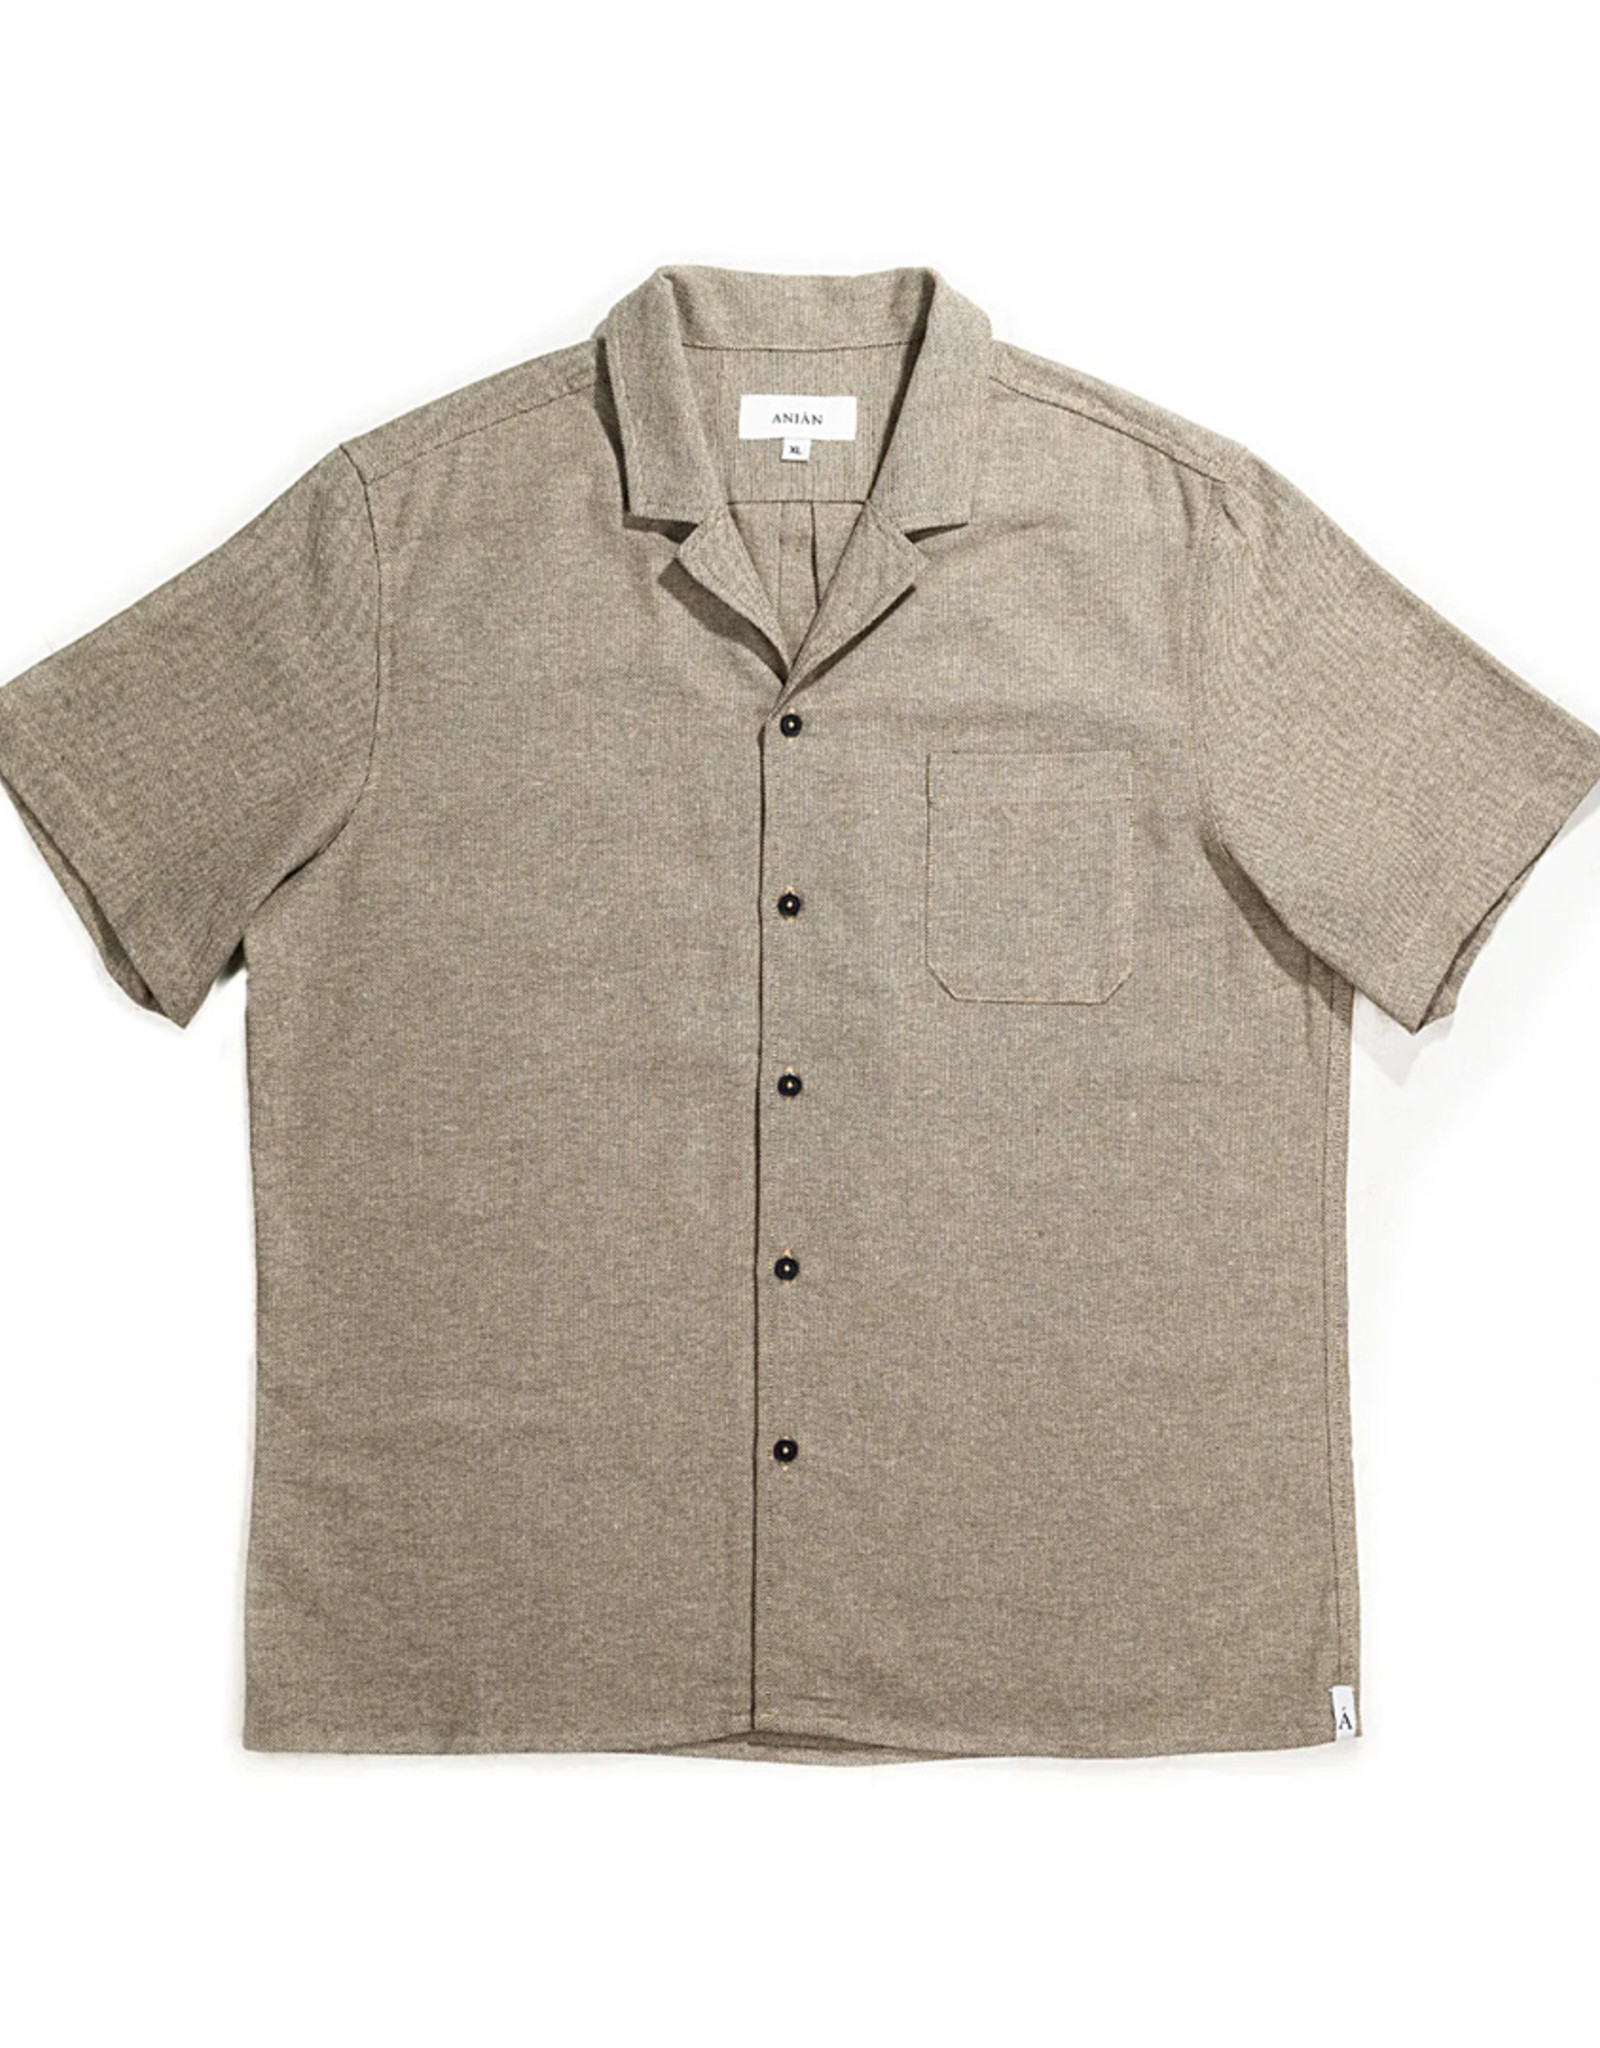 Anian - The Oxford Camp Collar Shirt -  Mire